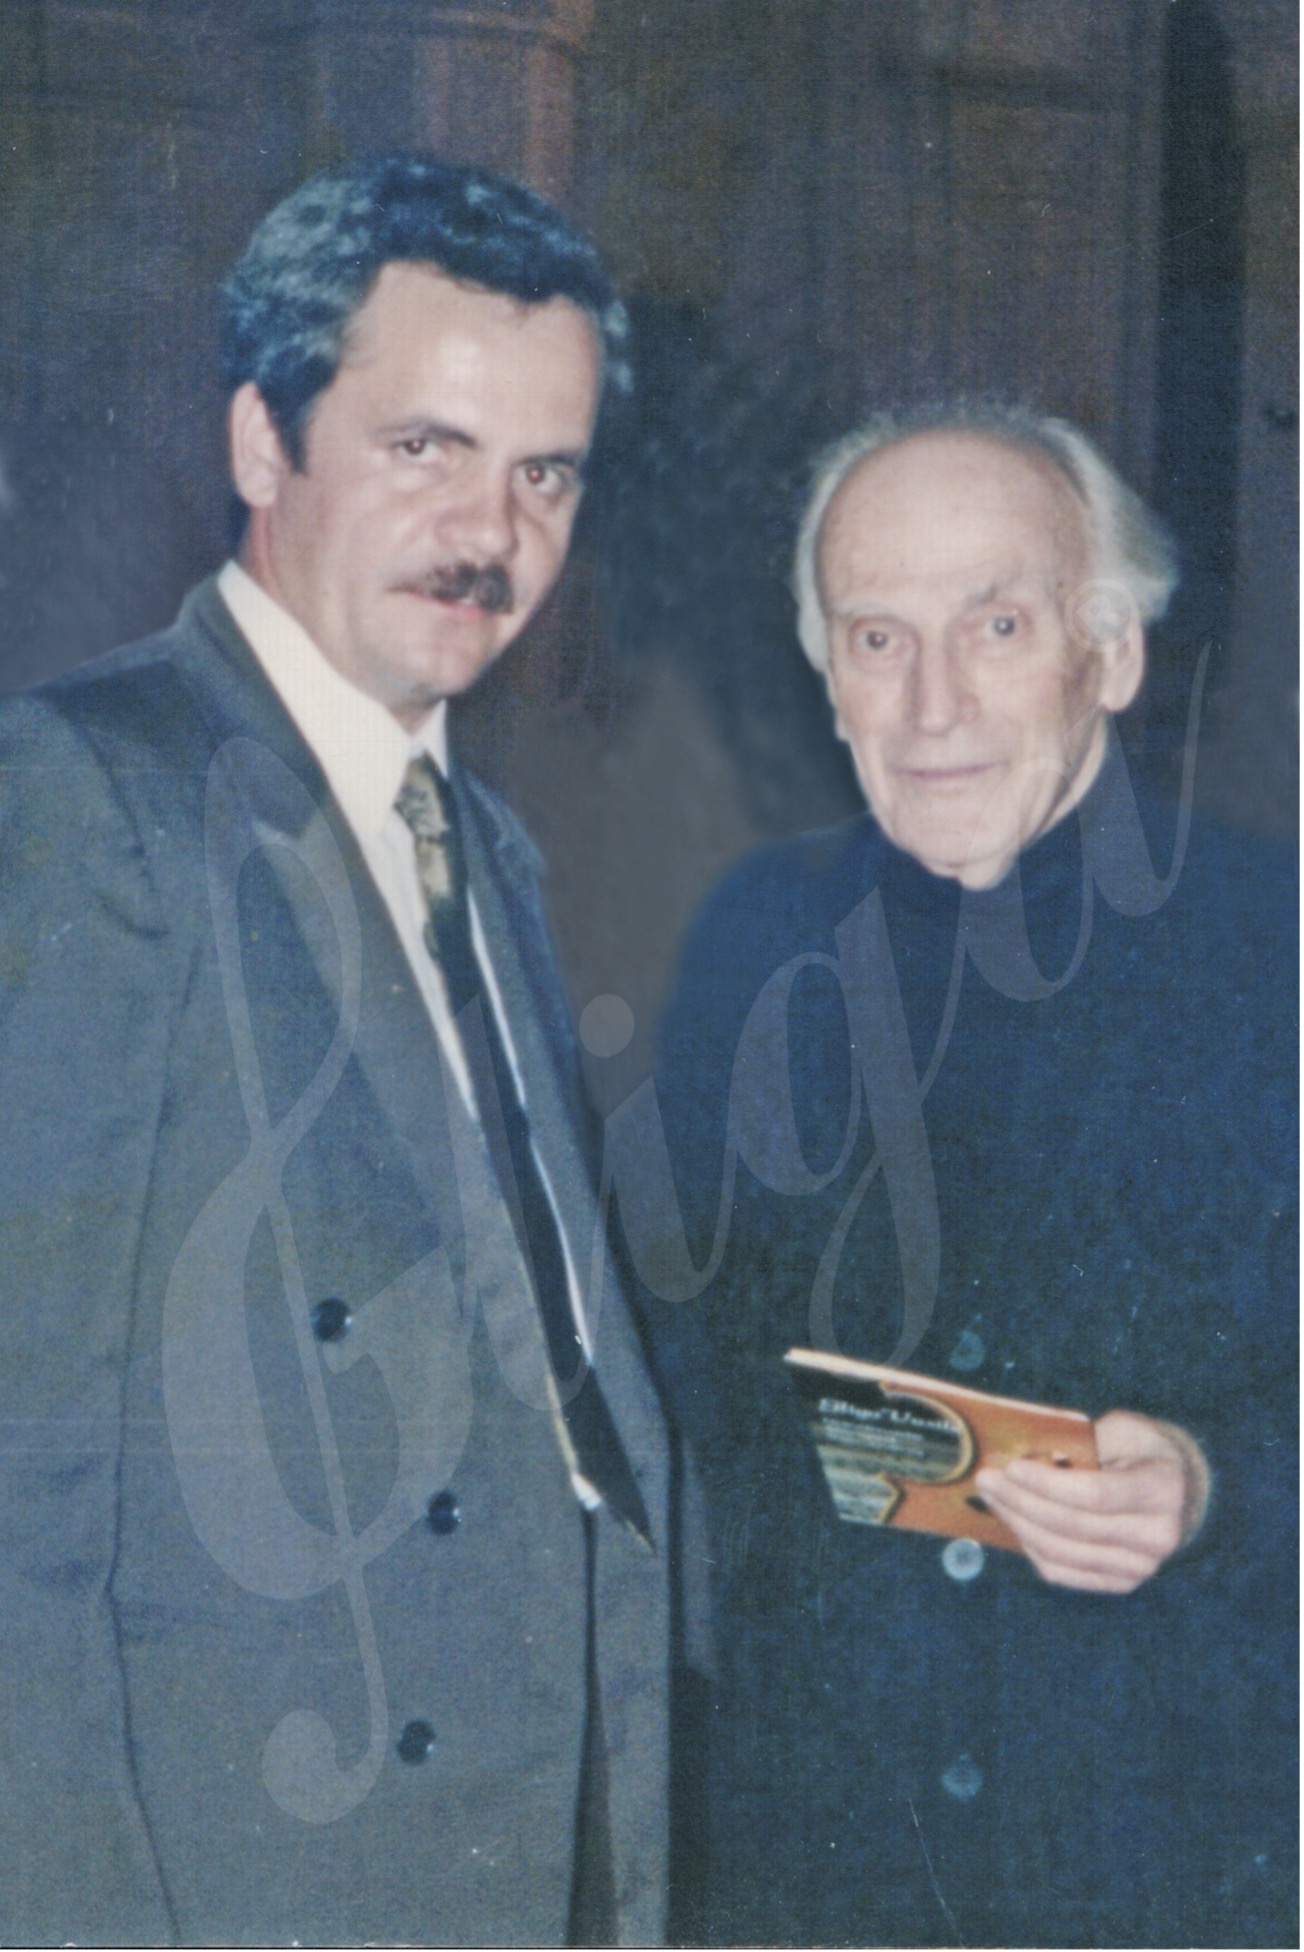 Gliga Vasile and Sir Lord Yehudi Menuhin in 1995 at George Enescu International Festival, Bucharest, Romania